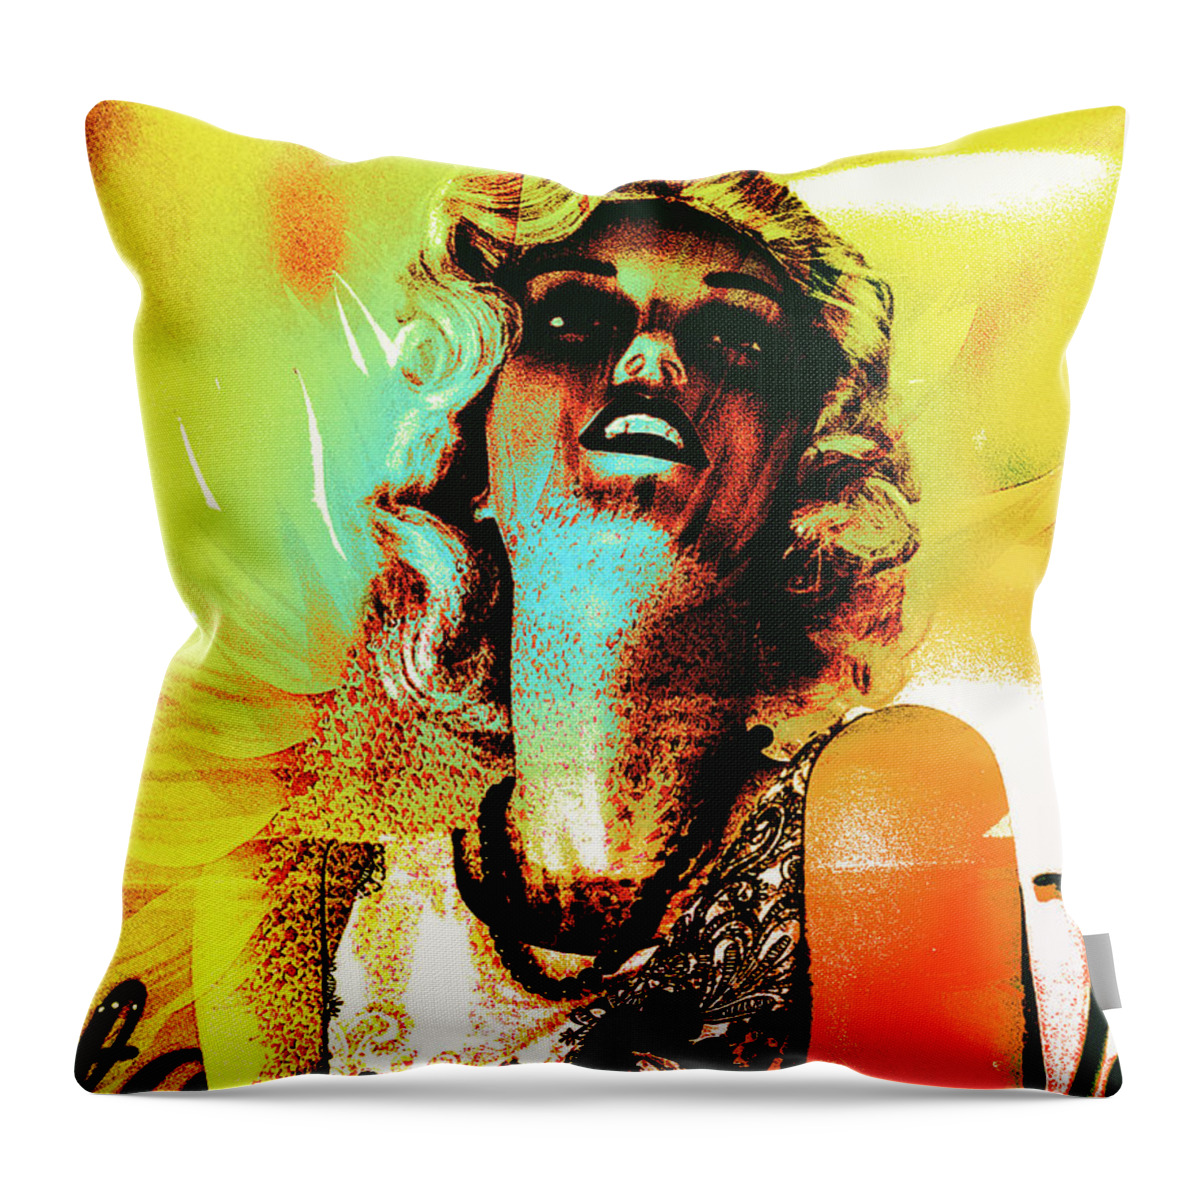 Woman Throw Pillow featuring the digital art Having fun by Gabi Hampe